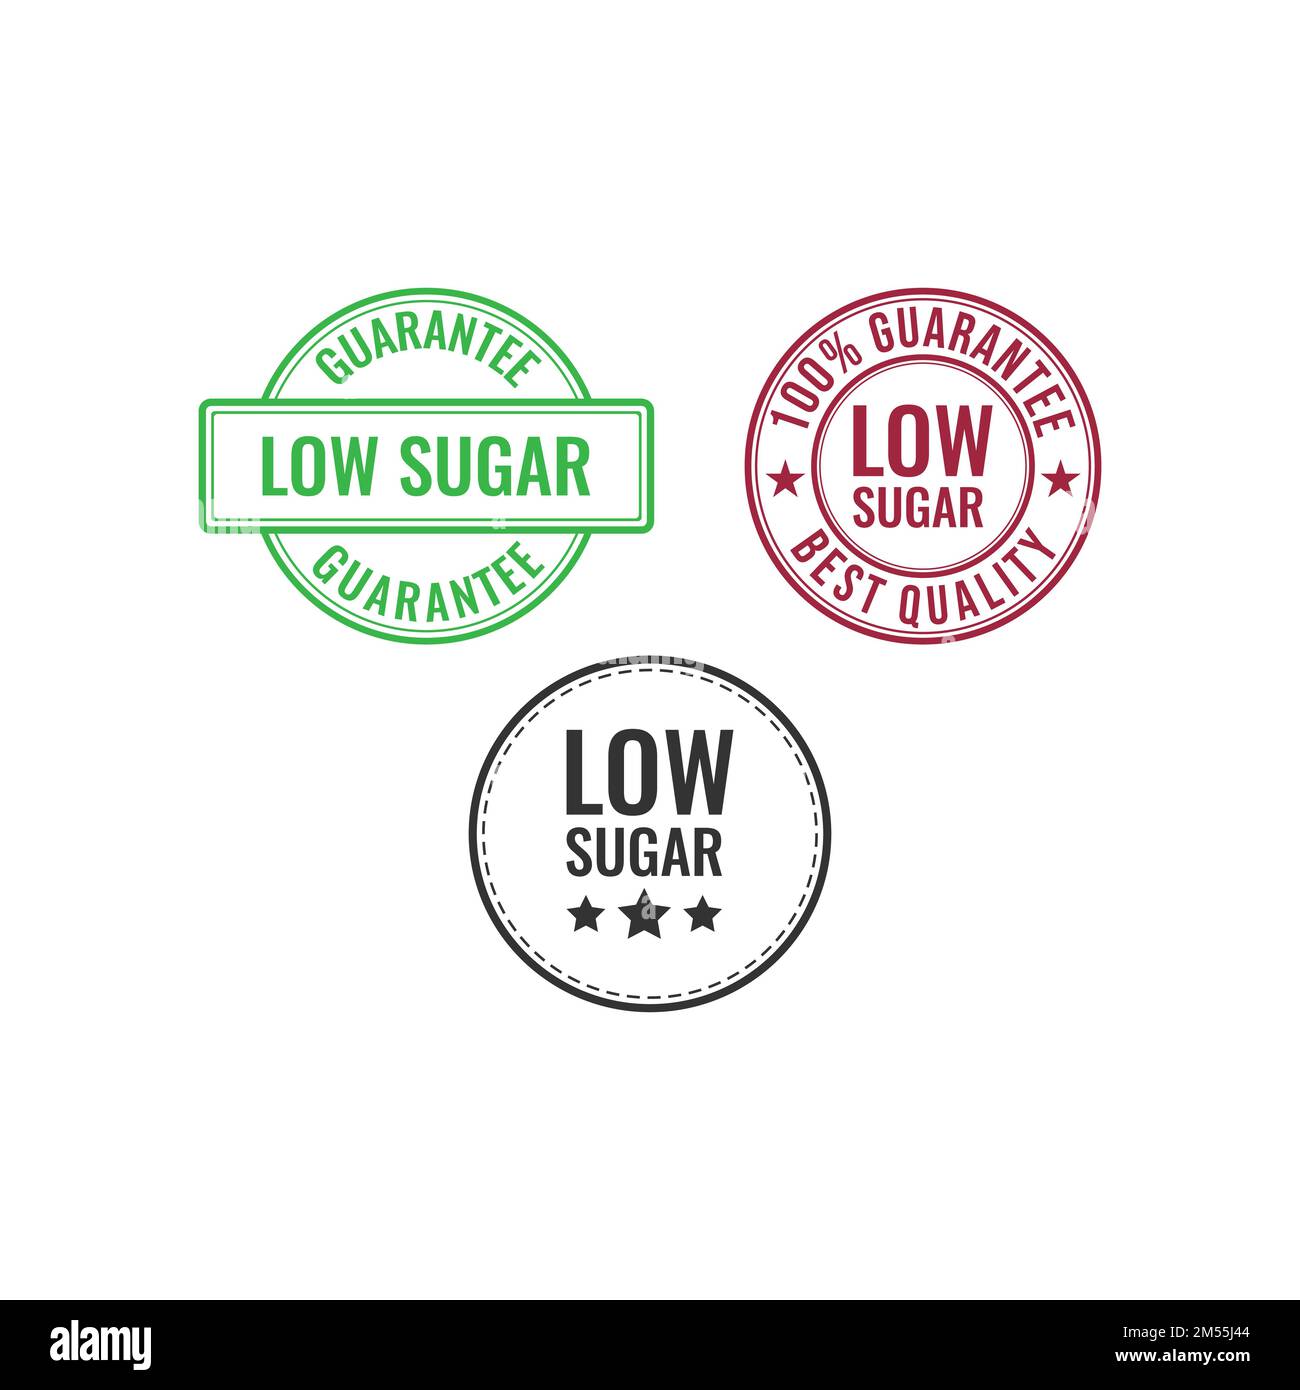 Low sugar sign or stamp vector image. Low sugar food labels vector design set Stock Vector